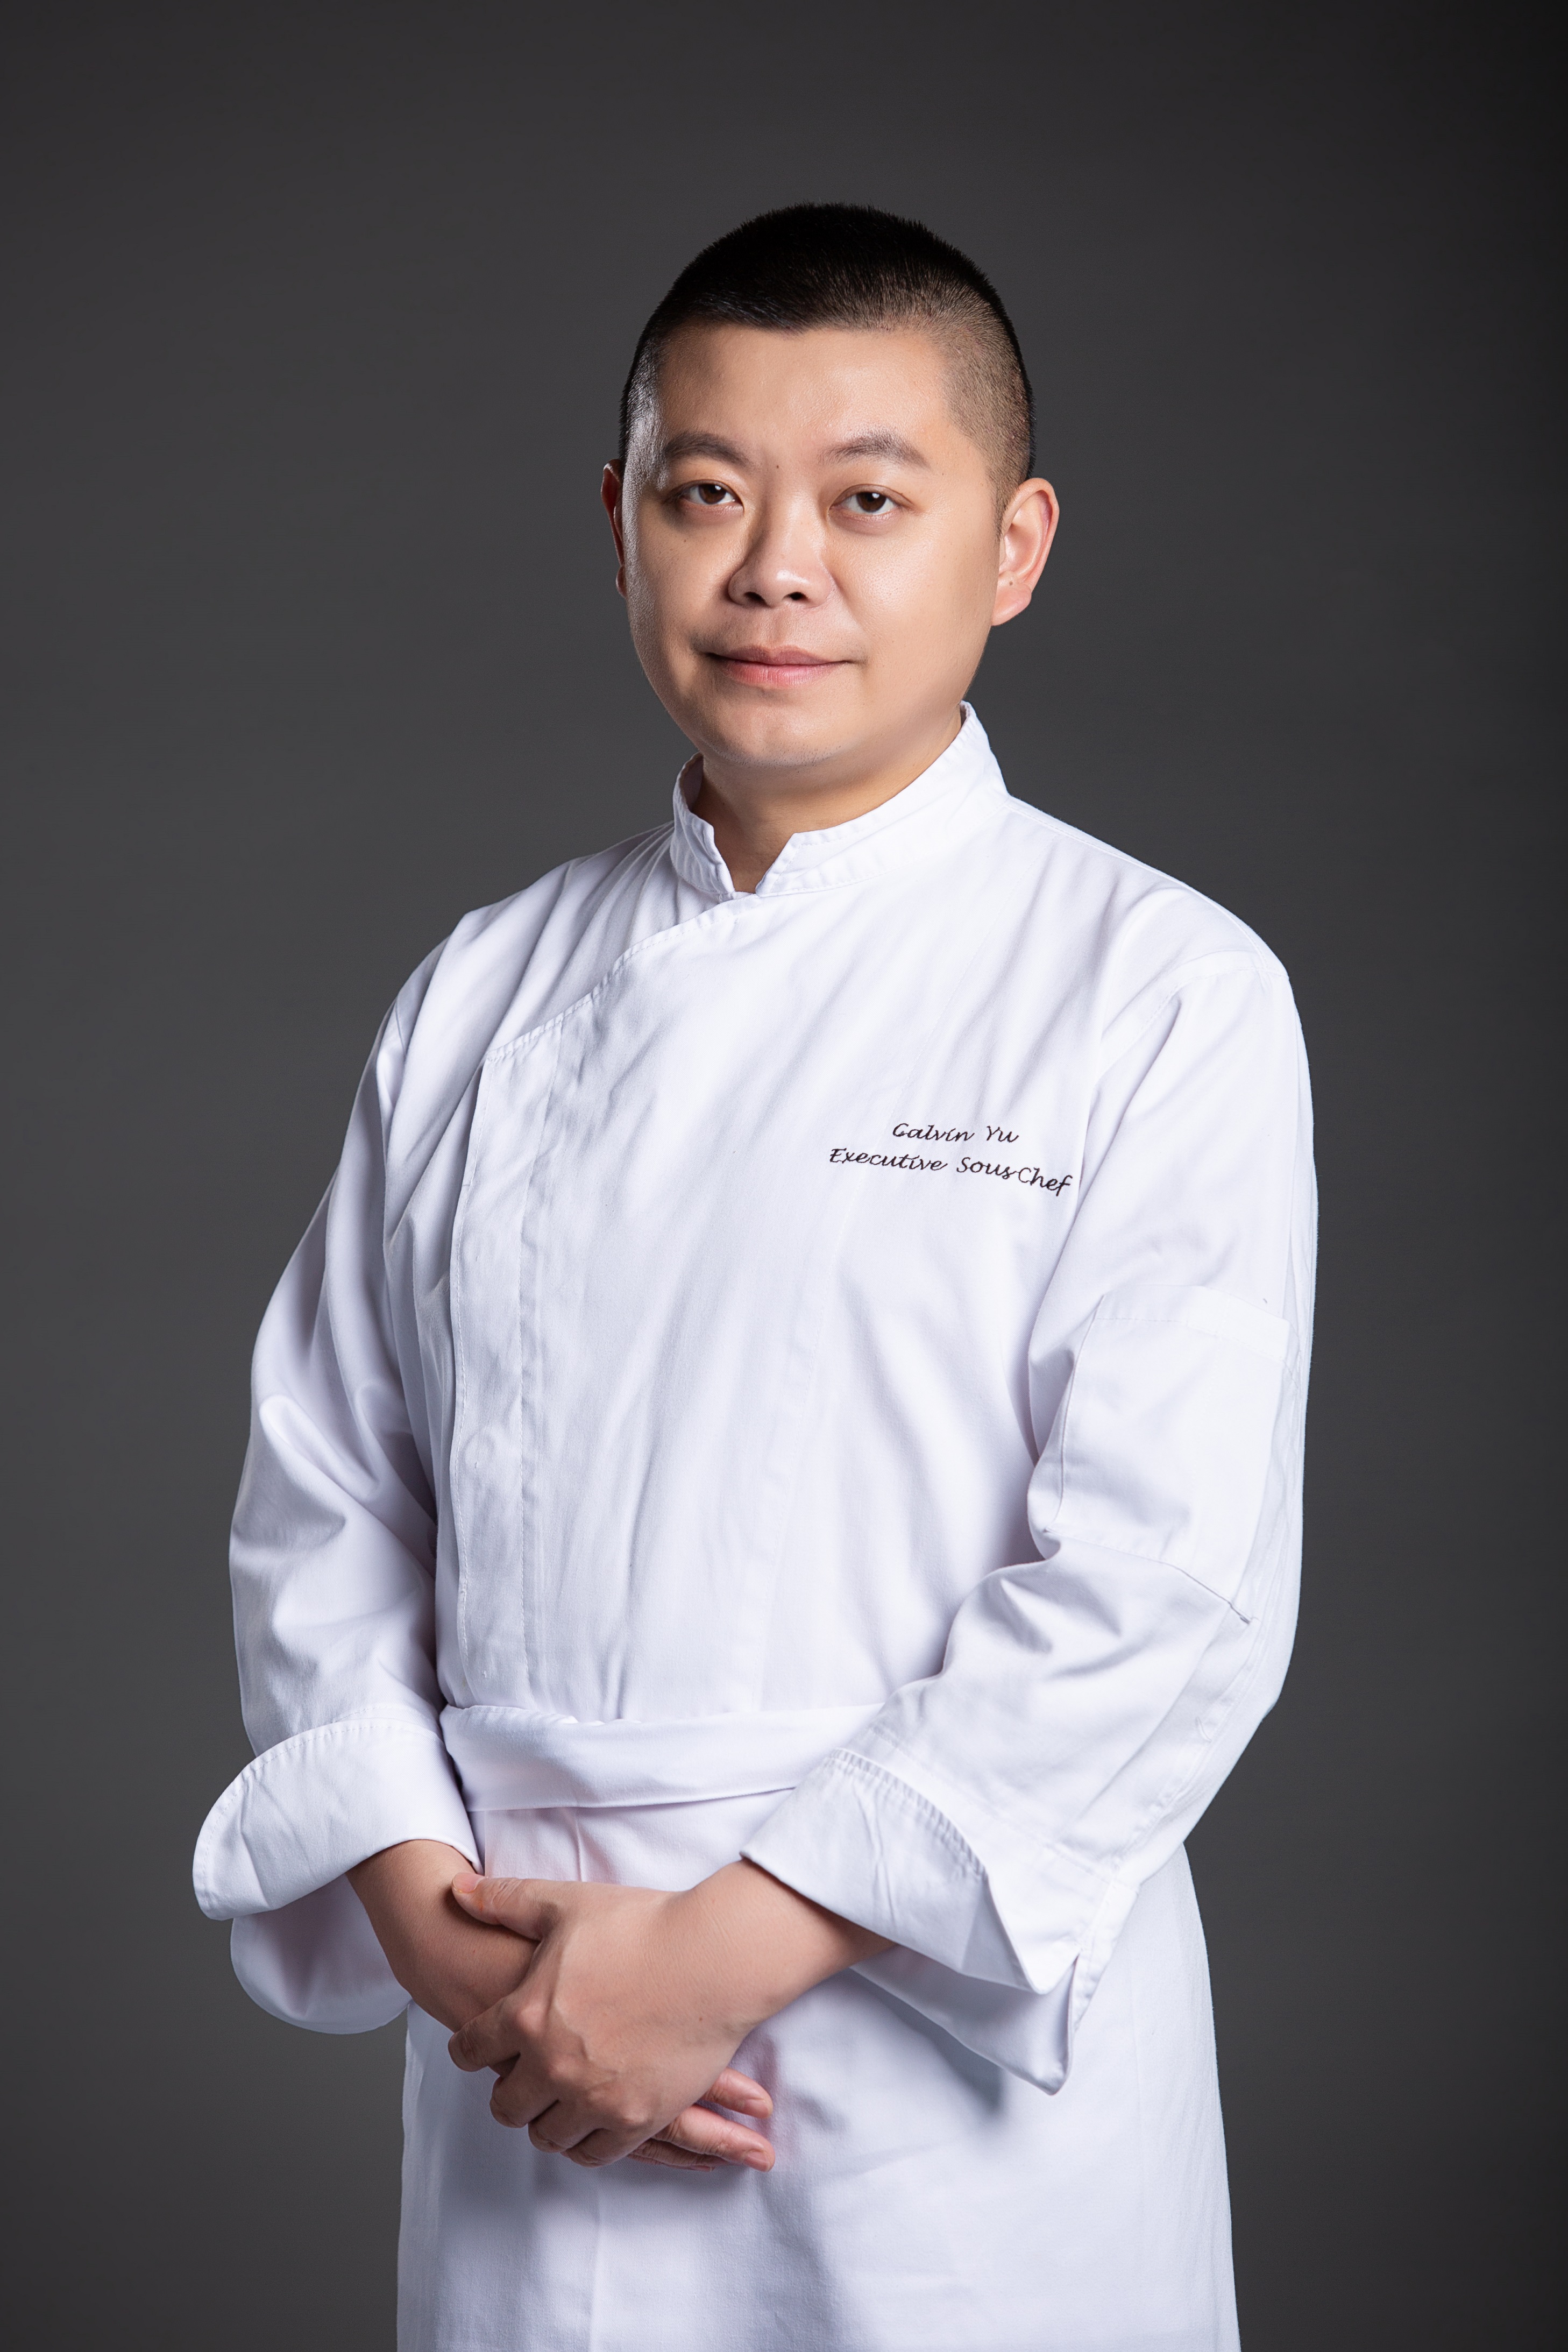 Executive Sous Chef Calvin Yu of Xizhou Hall at Park Hyatt Suzhou